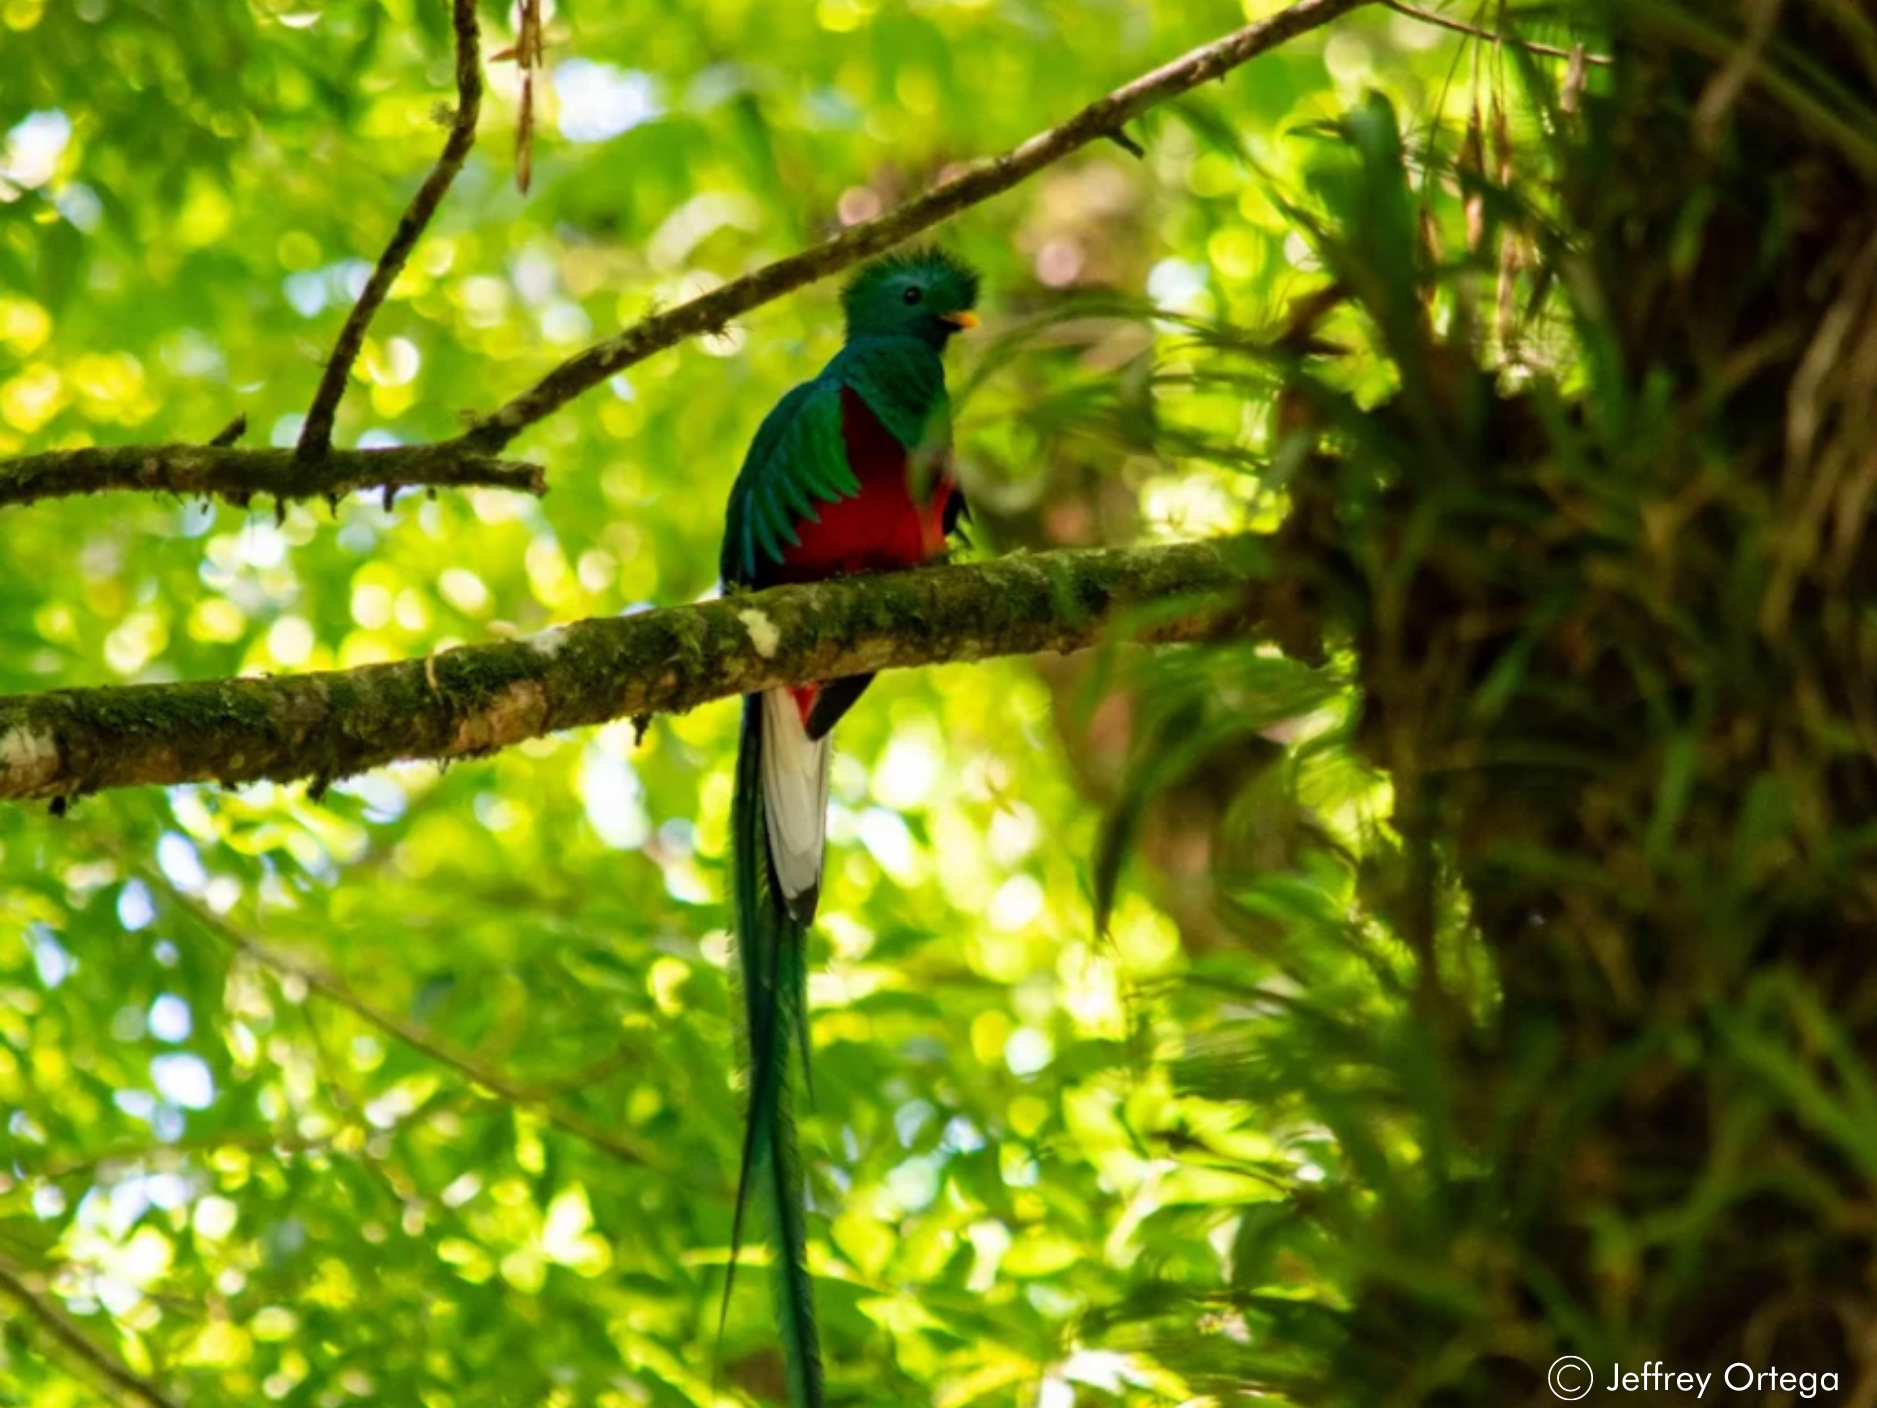 quetzal-costa-rica